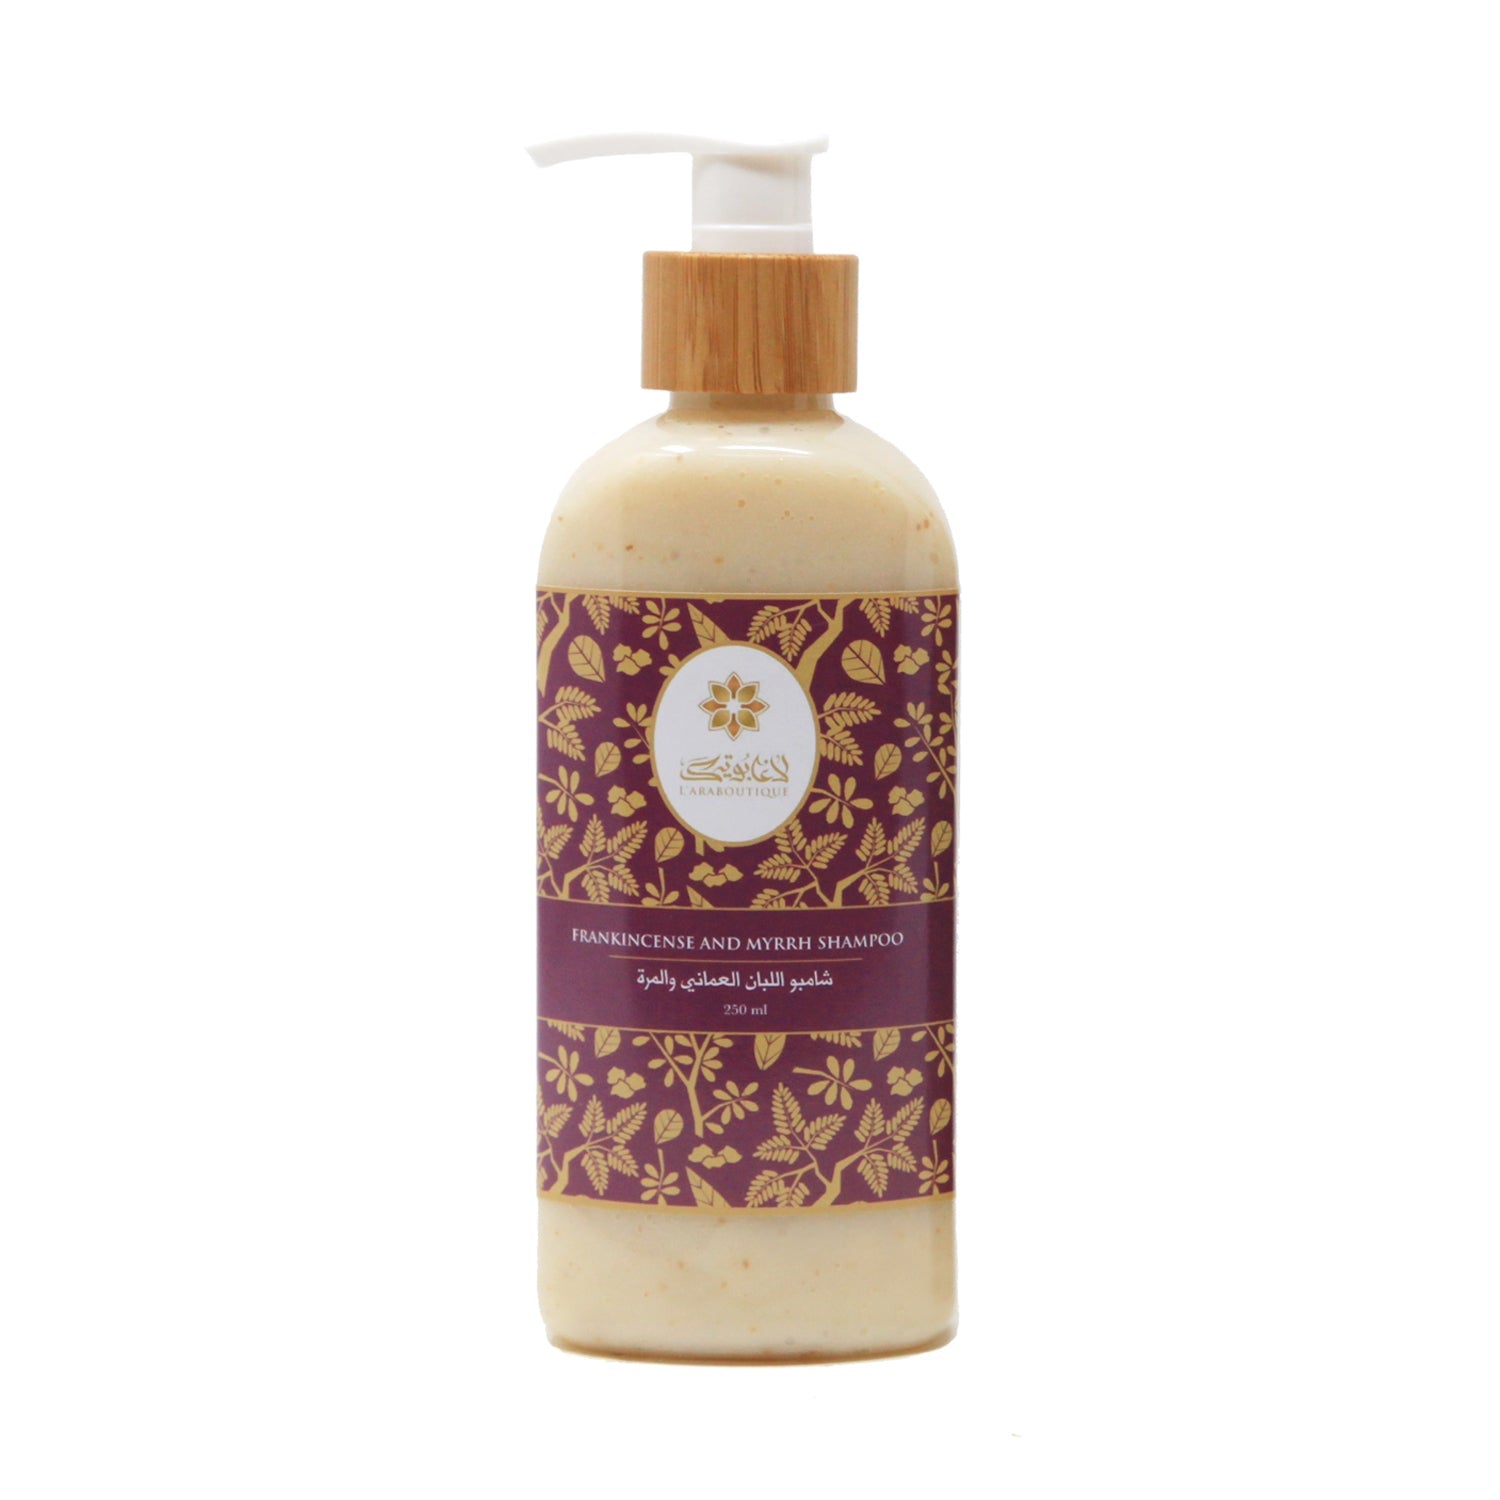 Frankincense and Myrrh Shampoo - 250ml